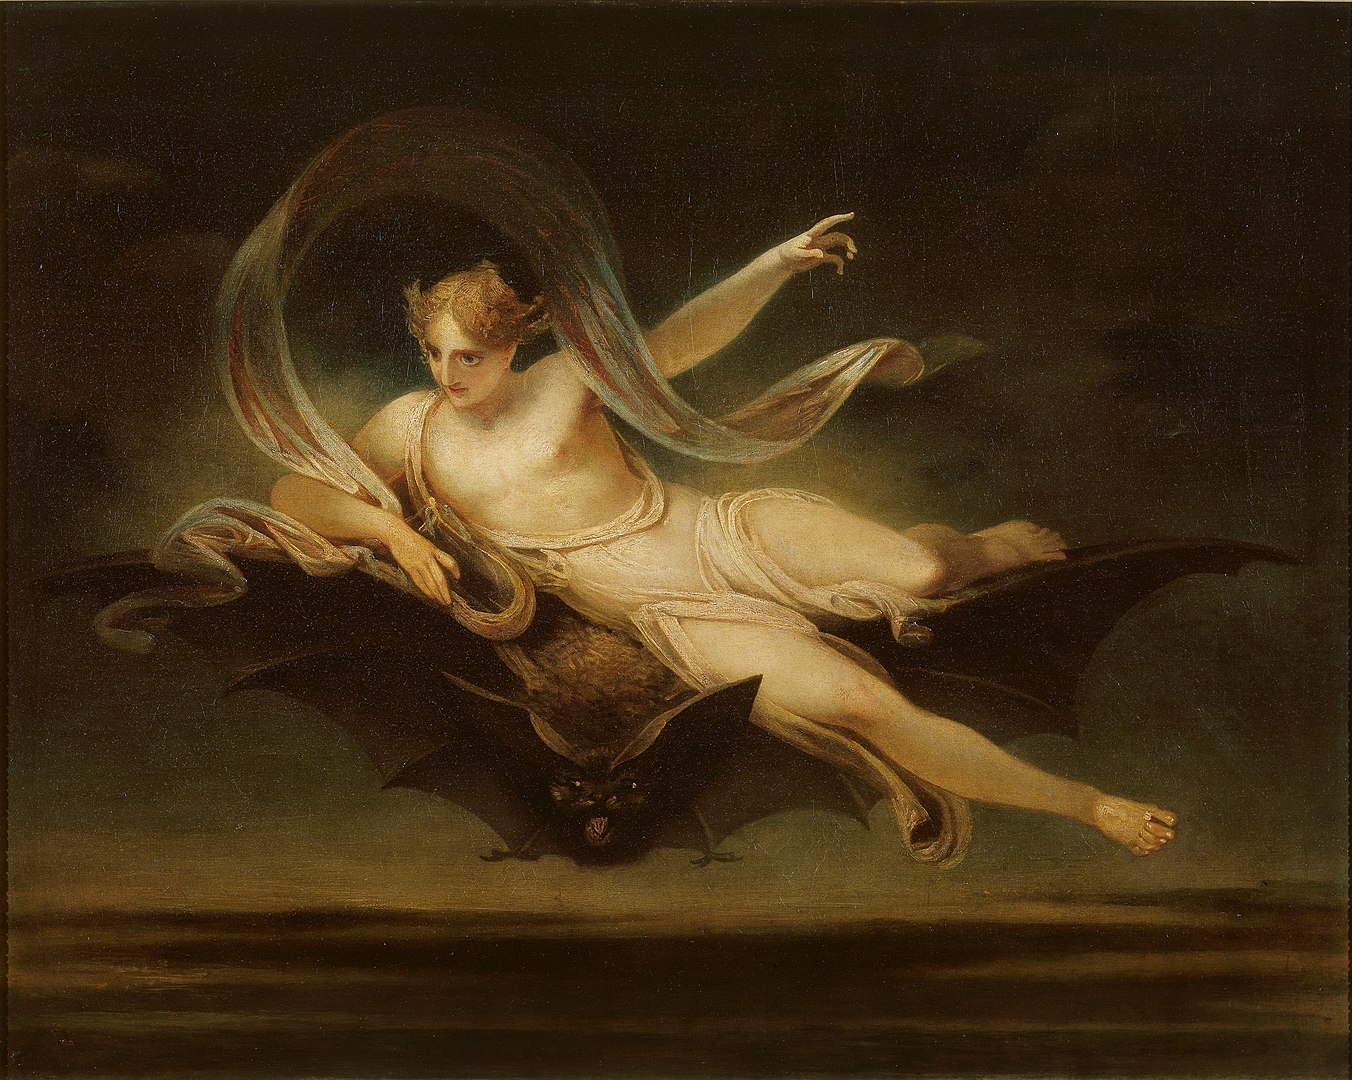 A woman flies in the night on a bat through the air.